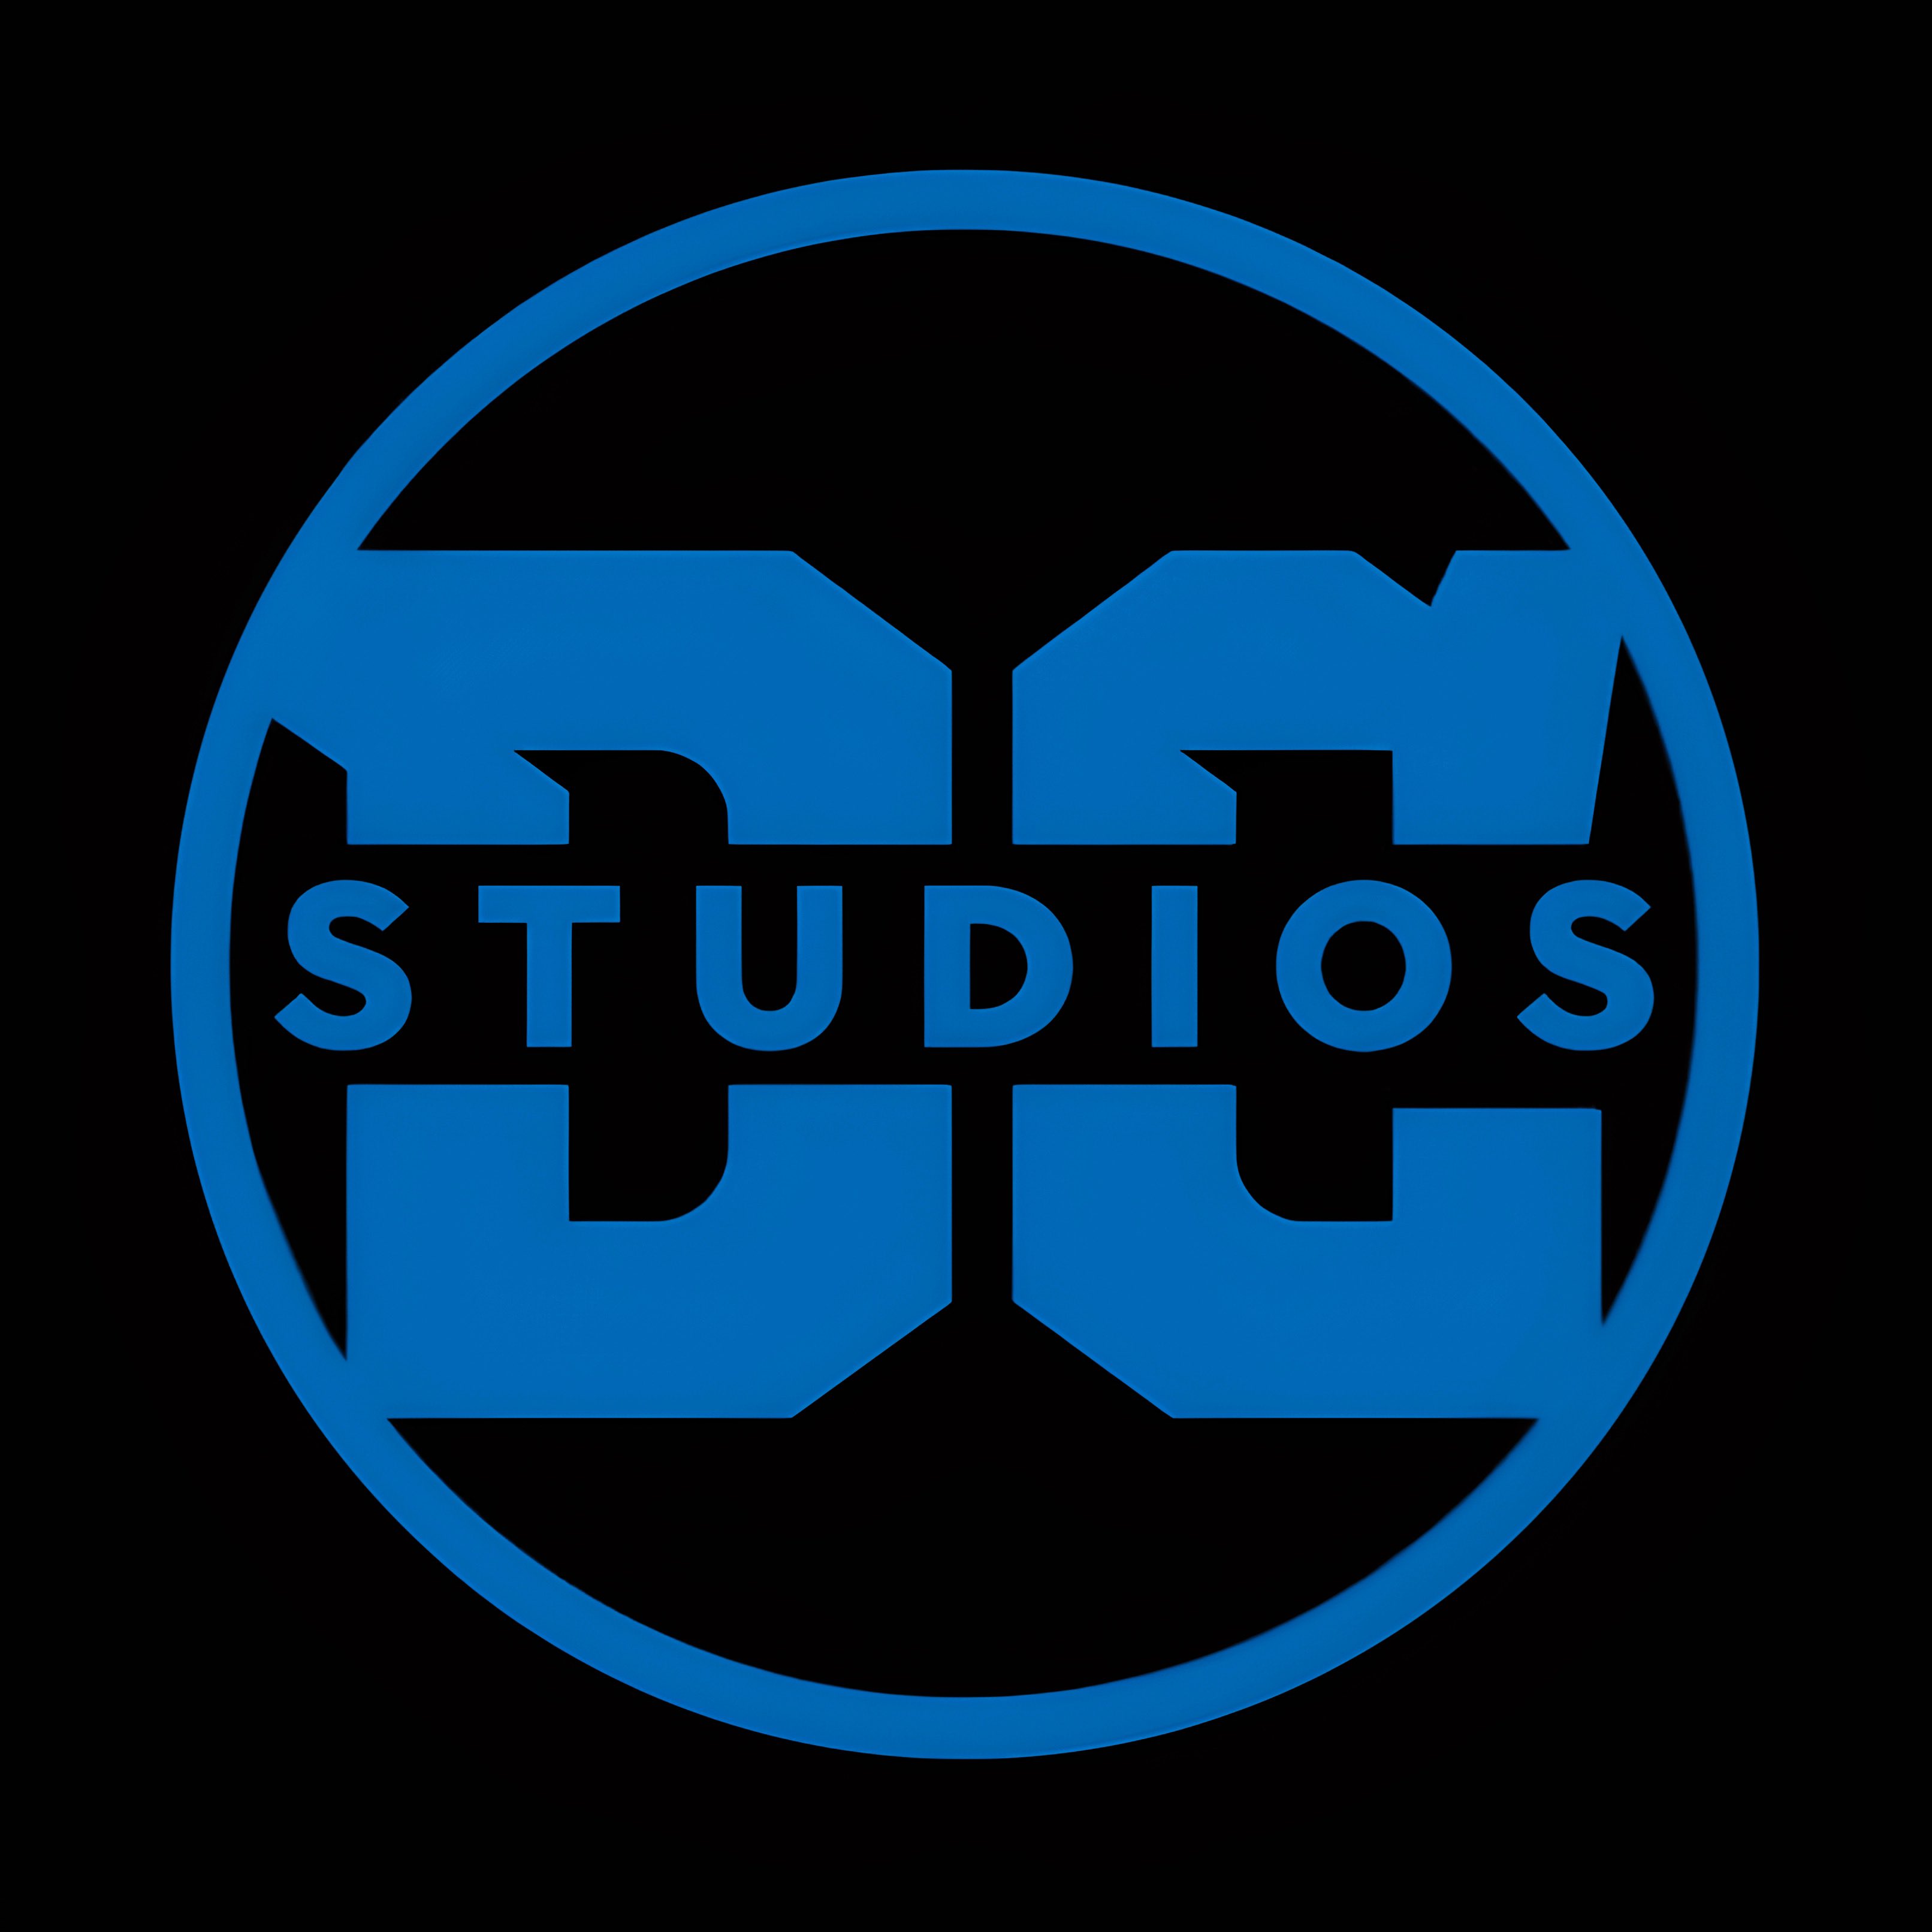 DC Studios Logo Hints At Justice League Reboot From James Gunn